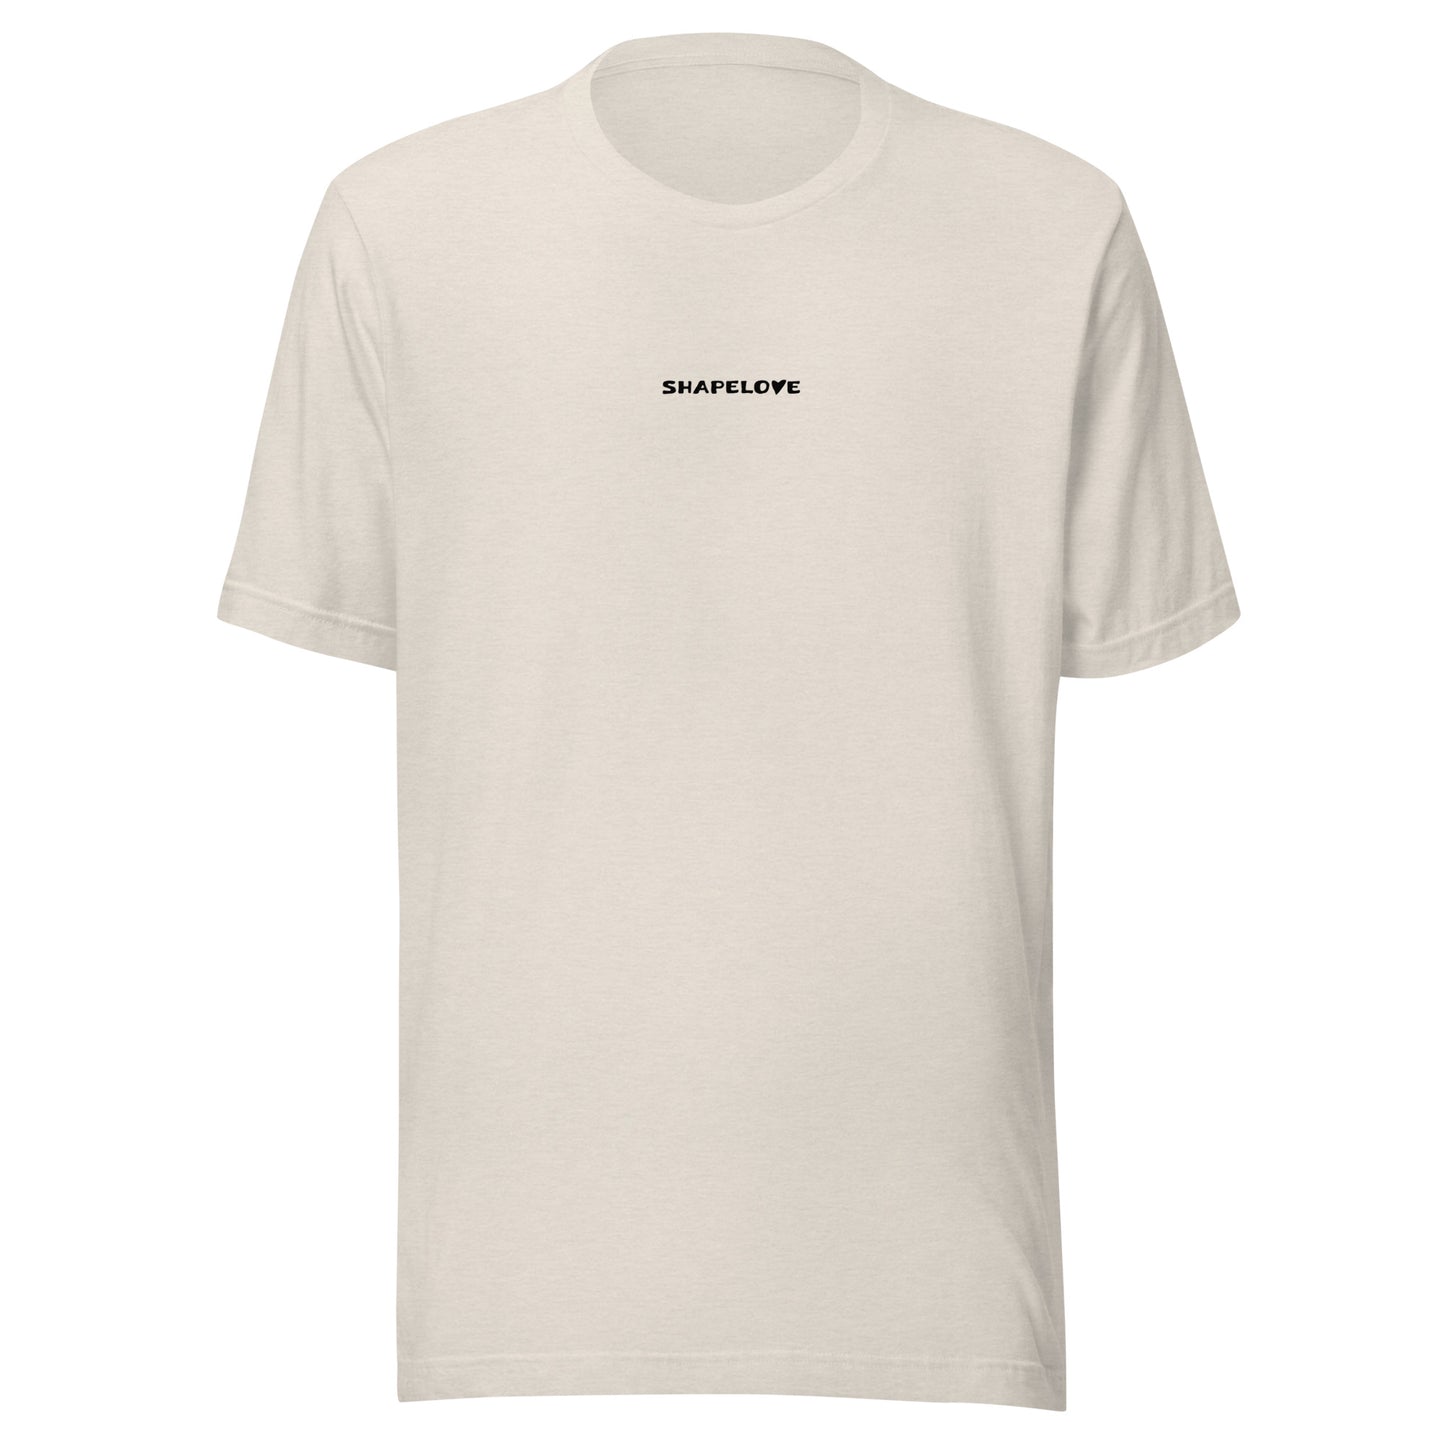 T-shirt | Shapelove | Black Print | Unisex